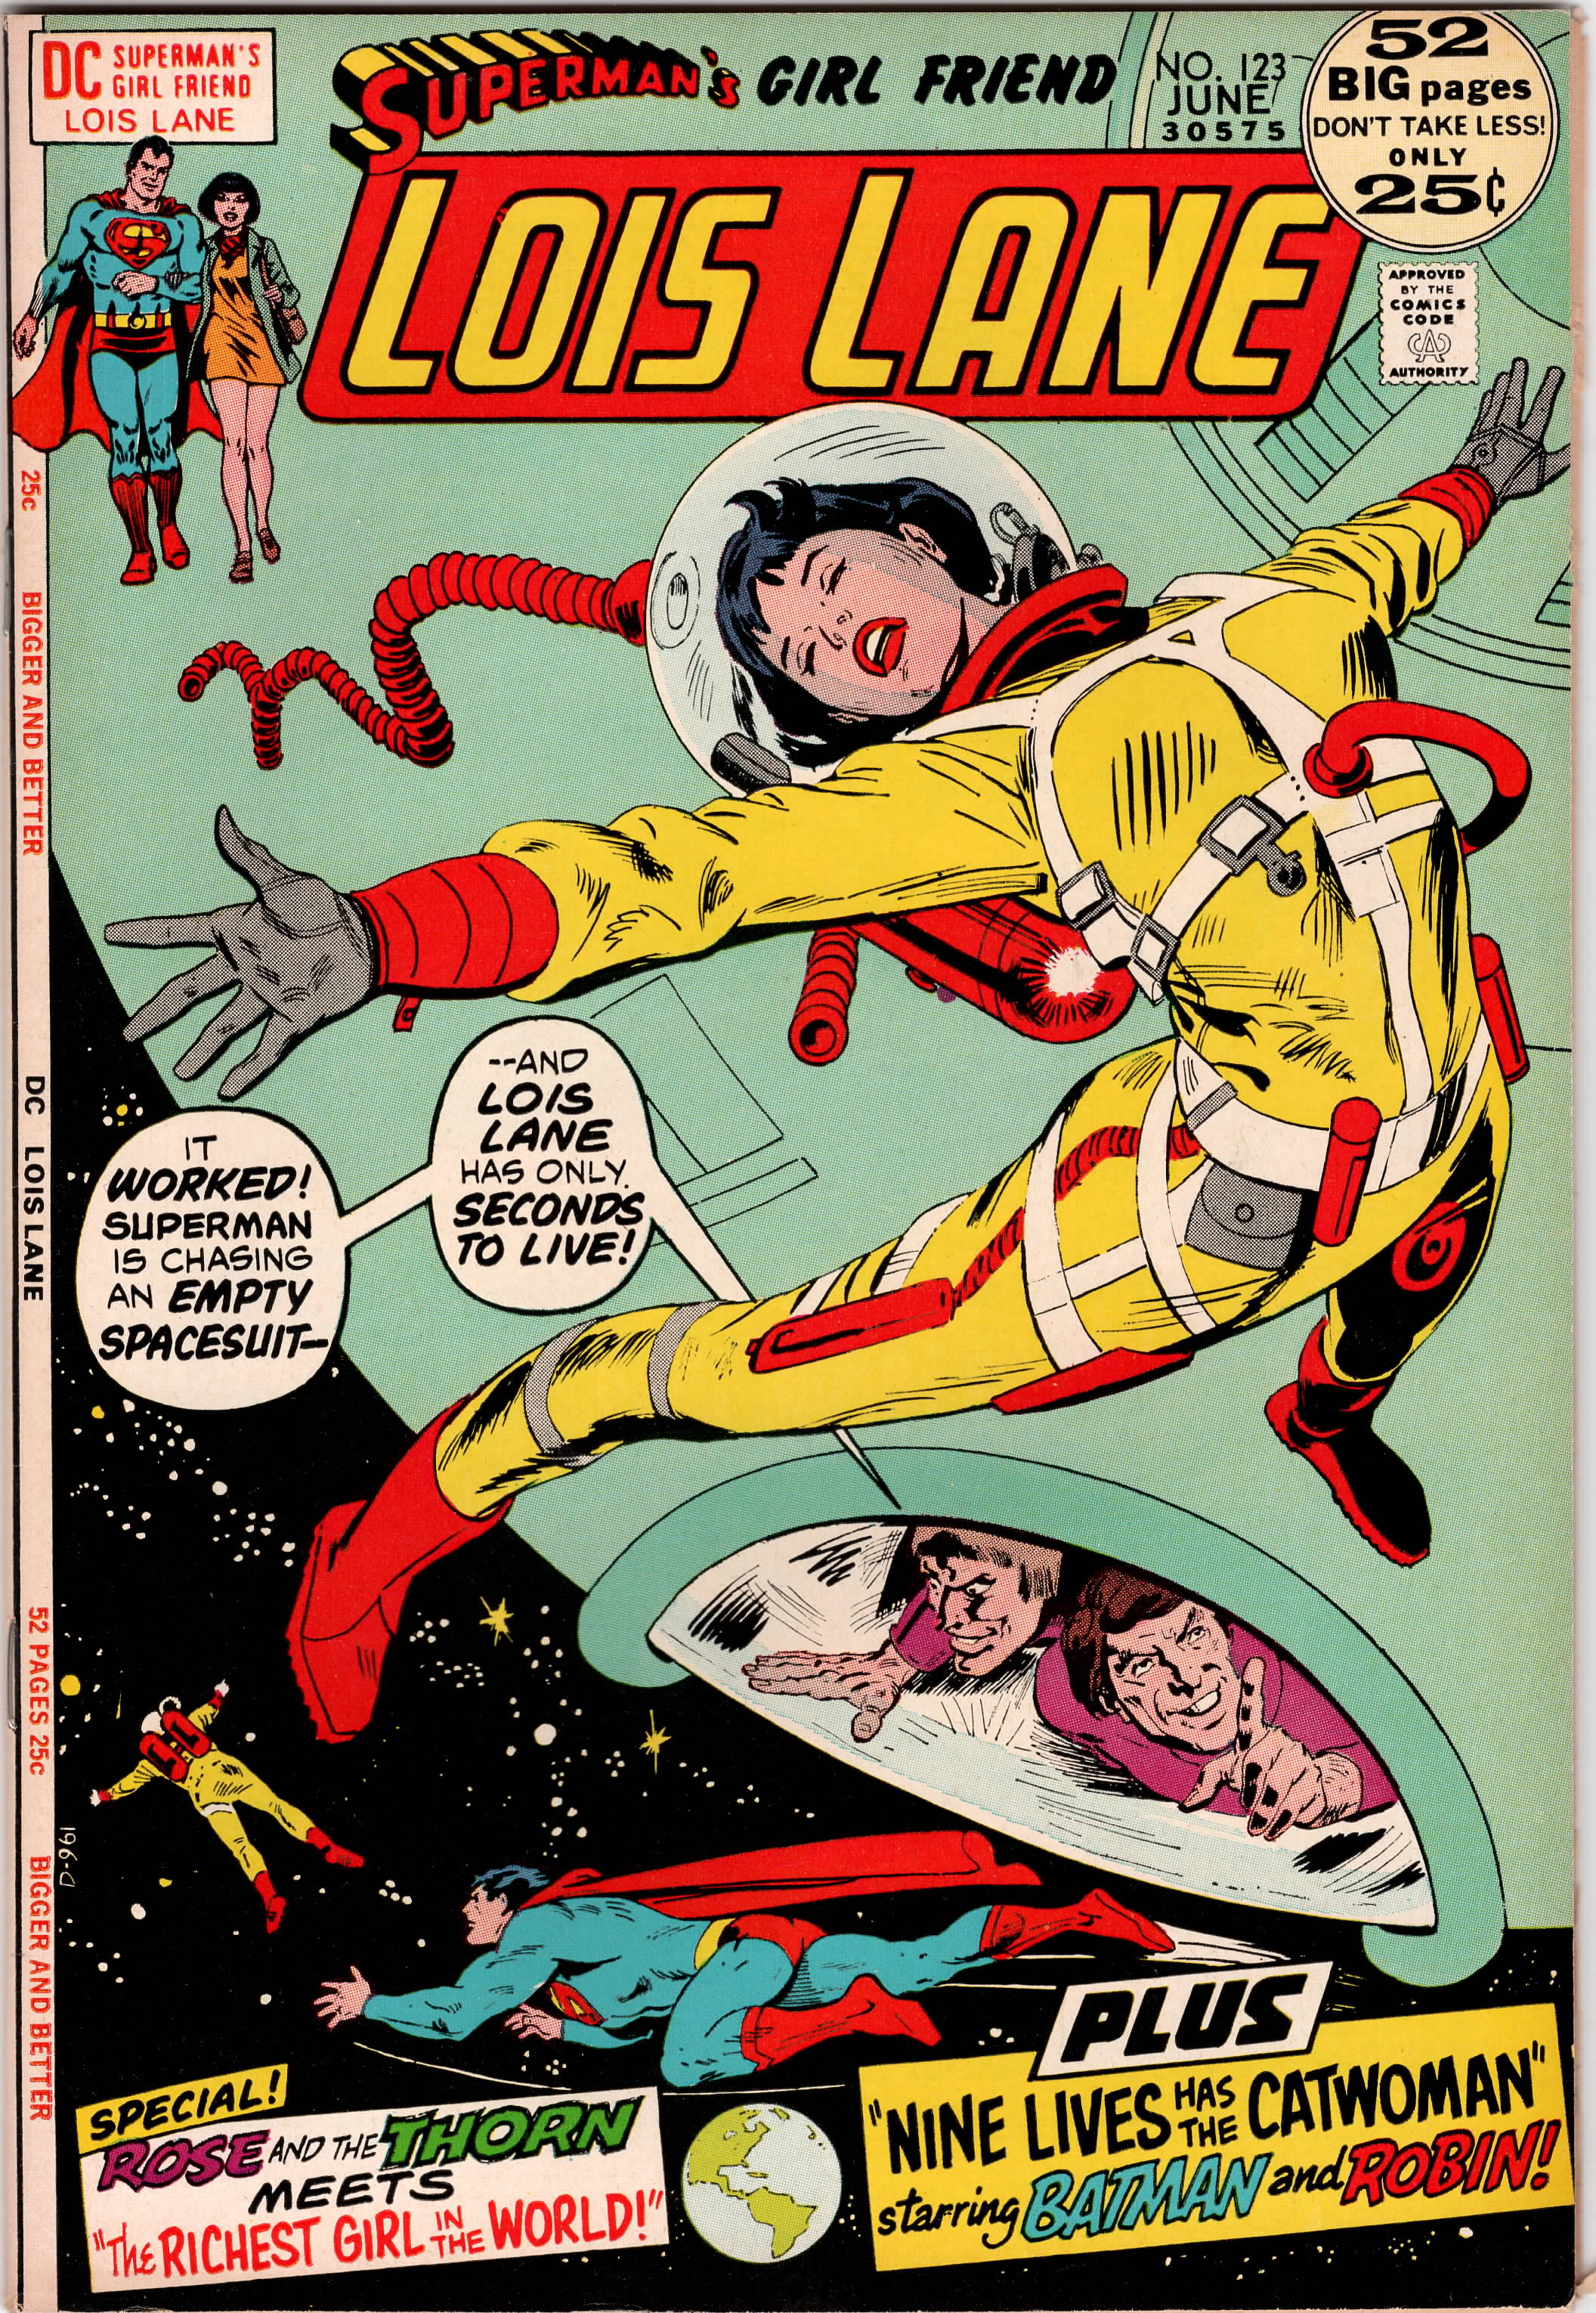 Superman's Girlfriend Lois Lane #123